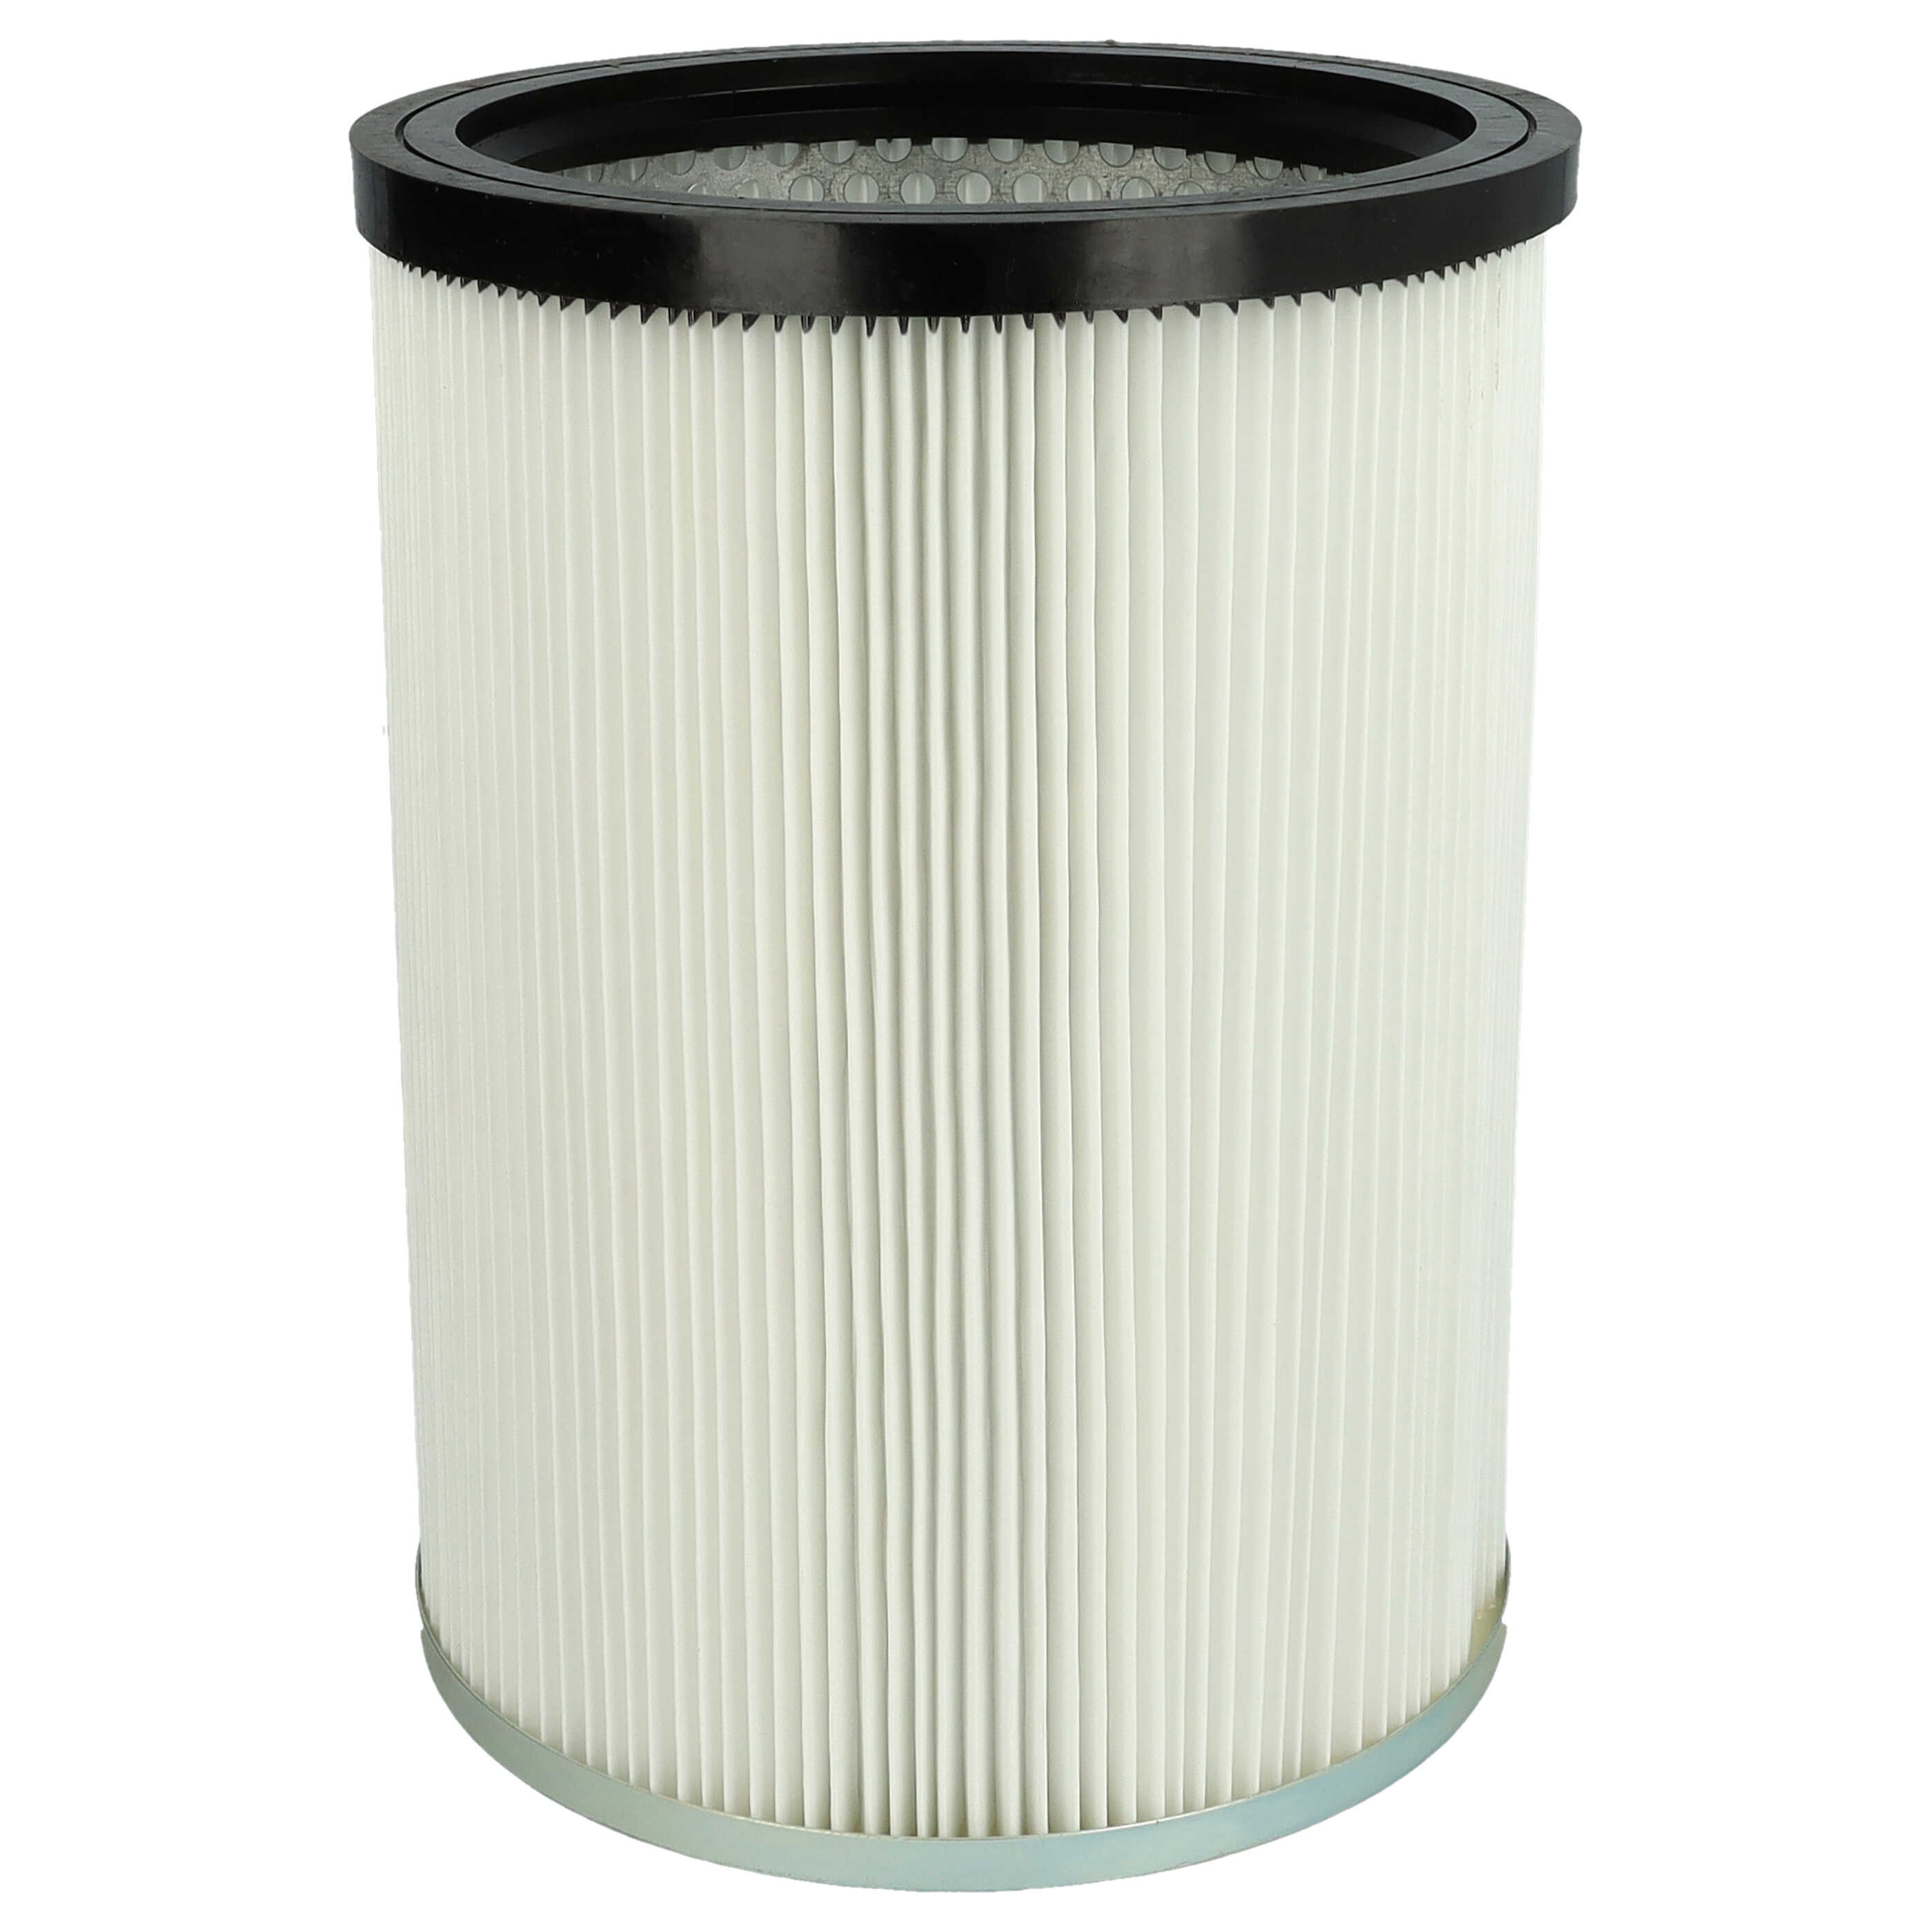 1x cartridge filter replaces Kärcher 9.770-988.0, 6.907-038.0 for Kärcher Vacuum Cleaner, white